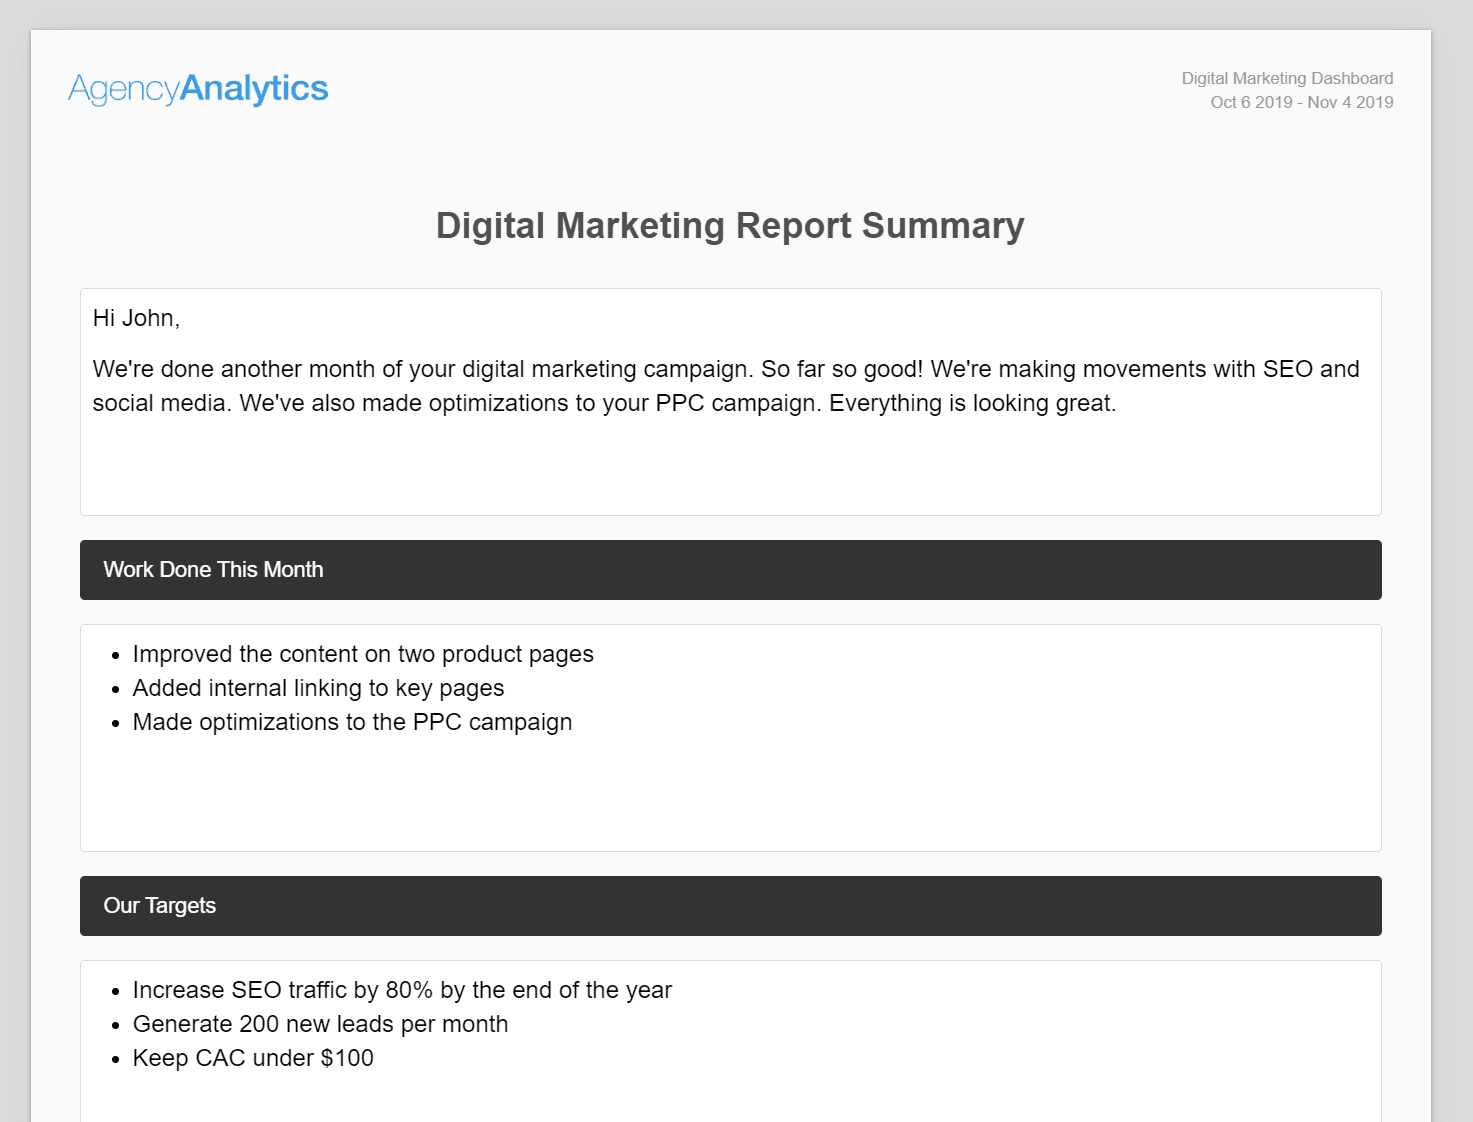 Digital marketing report summary